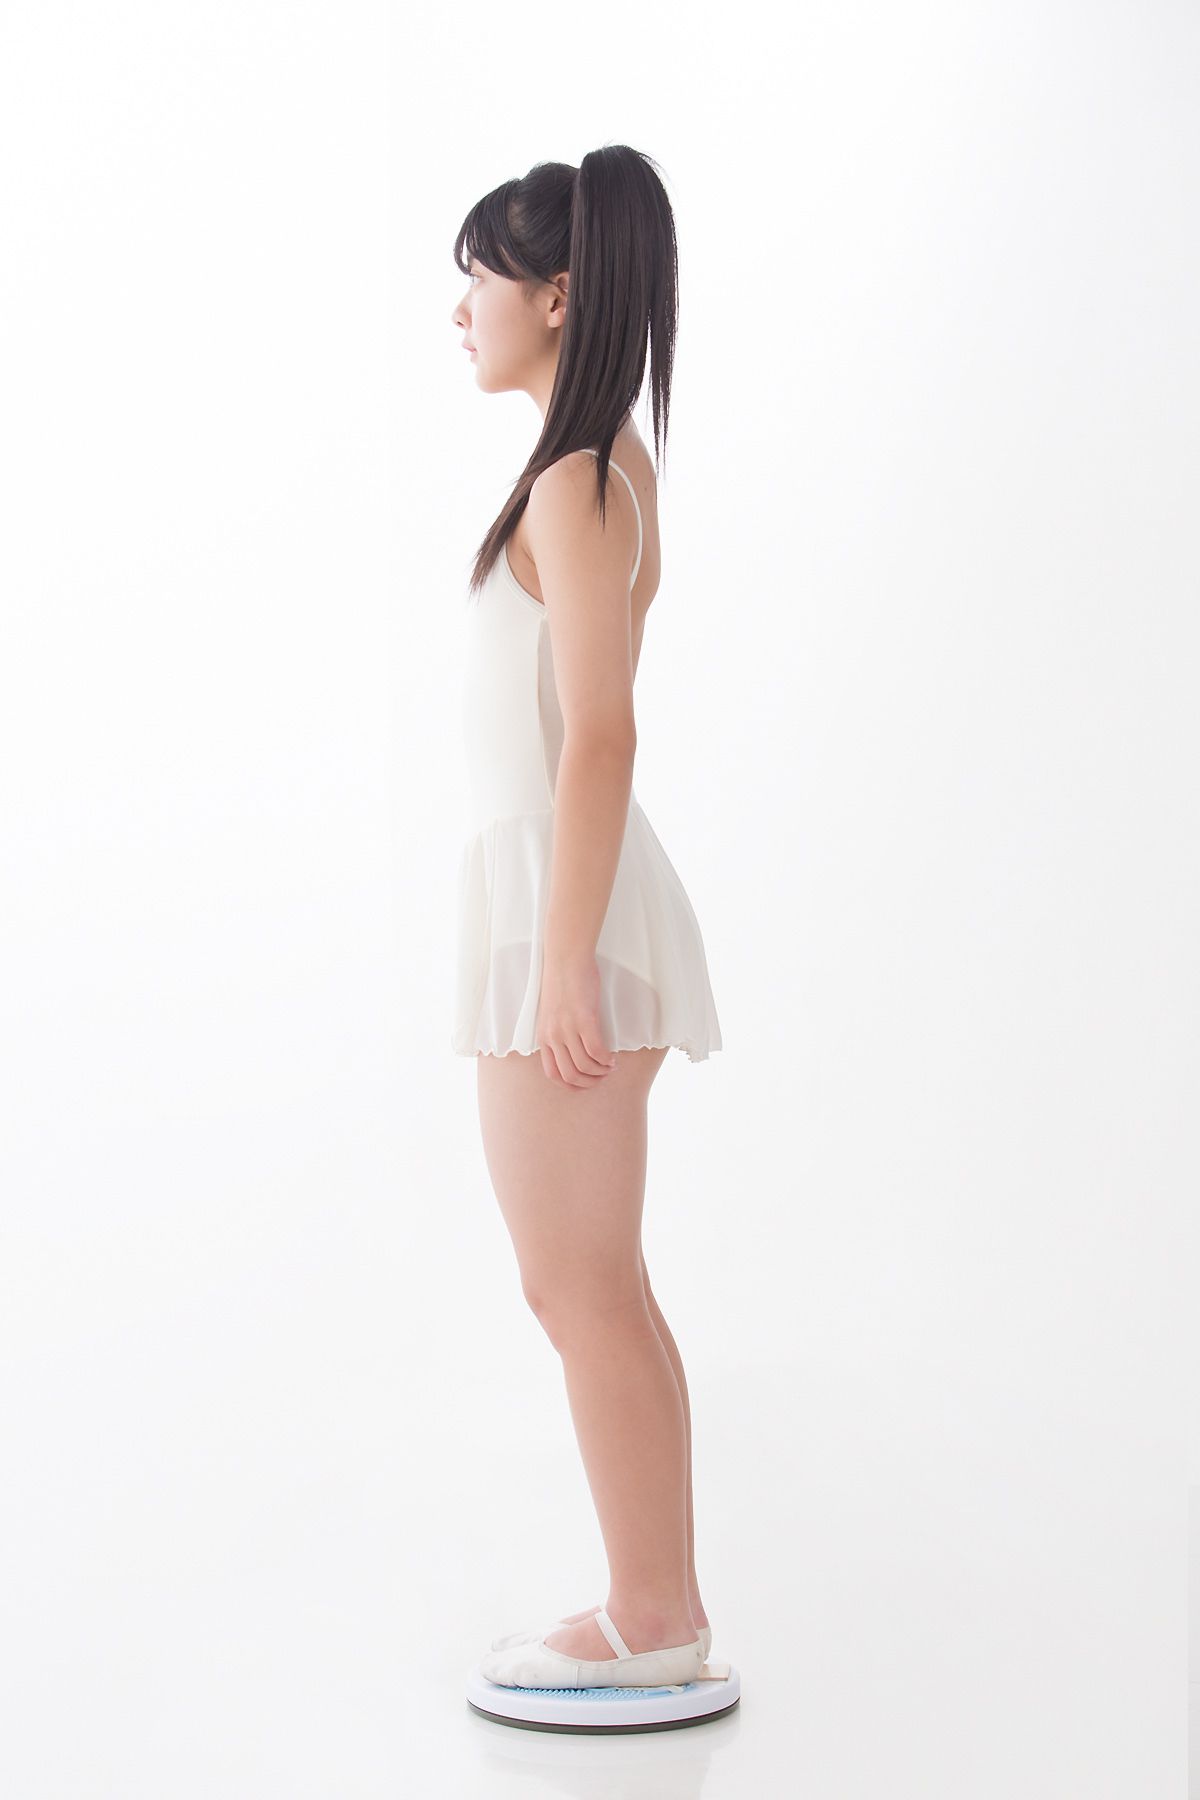 [Minisuka.tv] Saria Natsume 夏目咲莉愛 - Premium Gallery 2.2